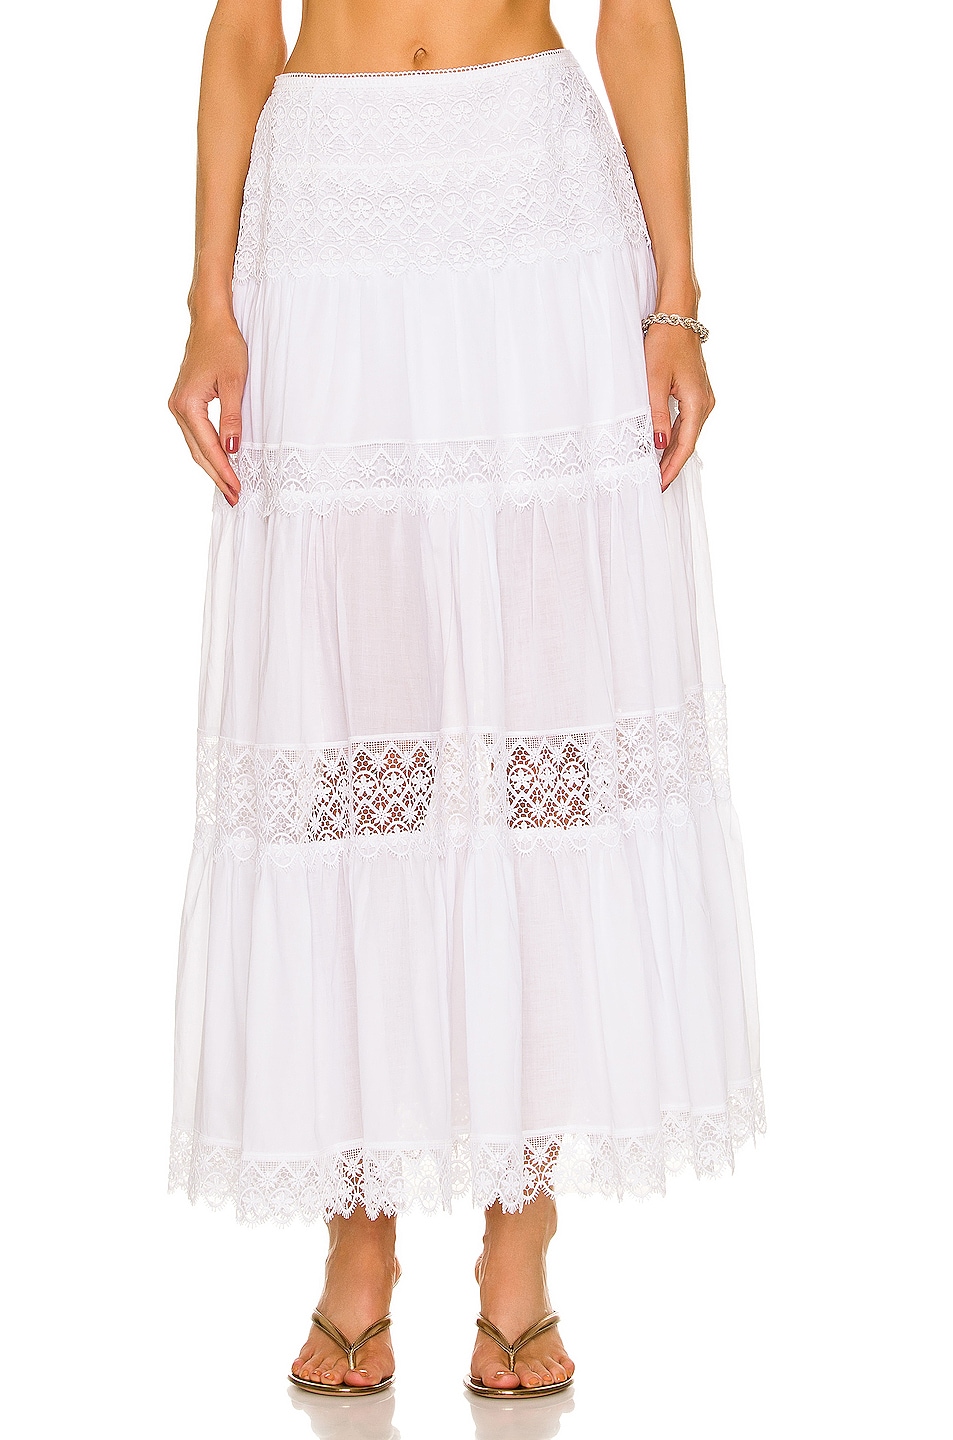 Charo Ruiz Ibiza Silke Maxi Skirt in White | FWRD